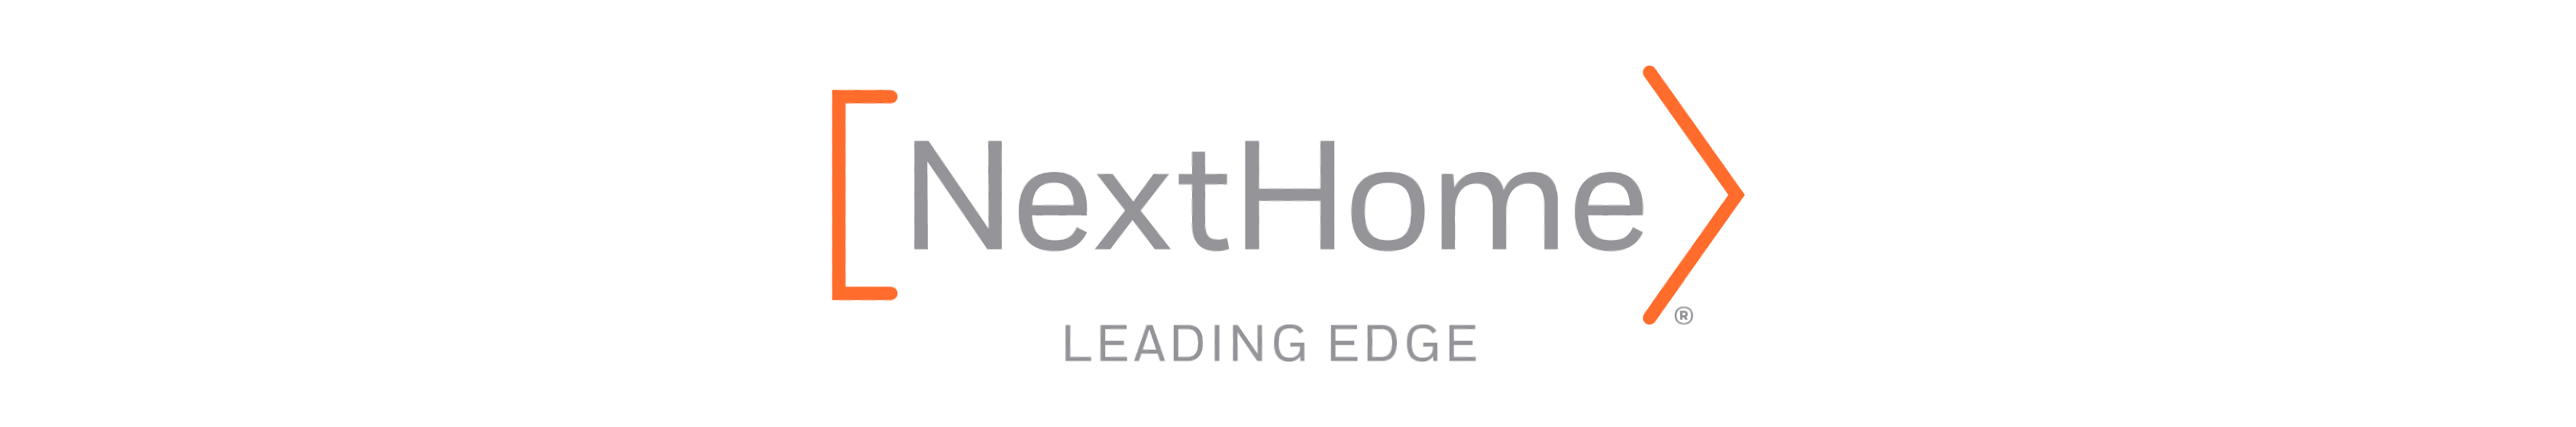 NextHome Leading Edge